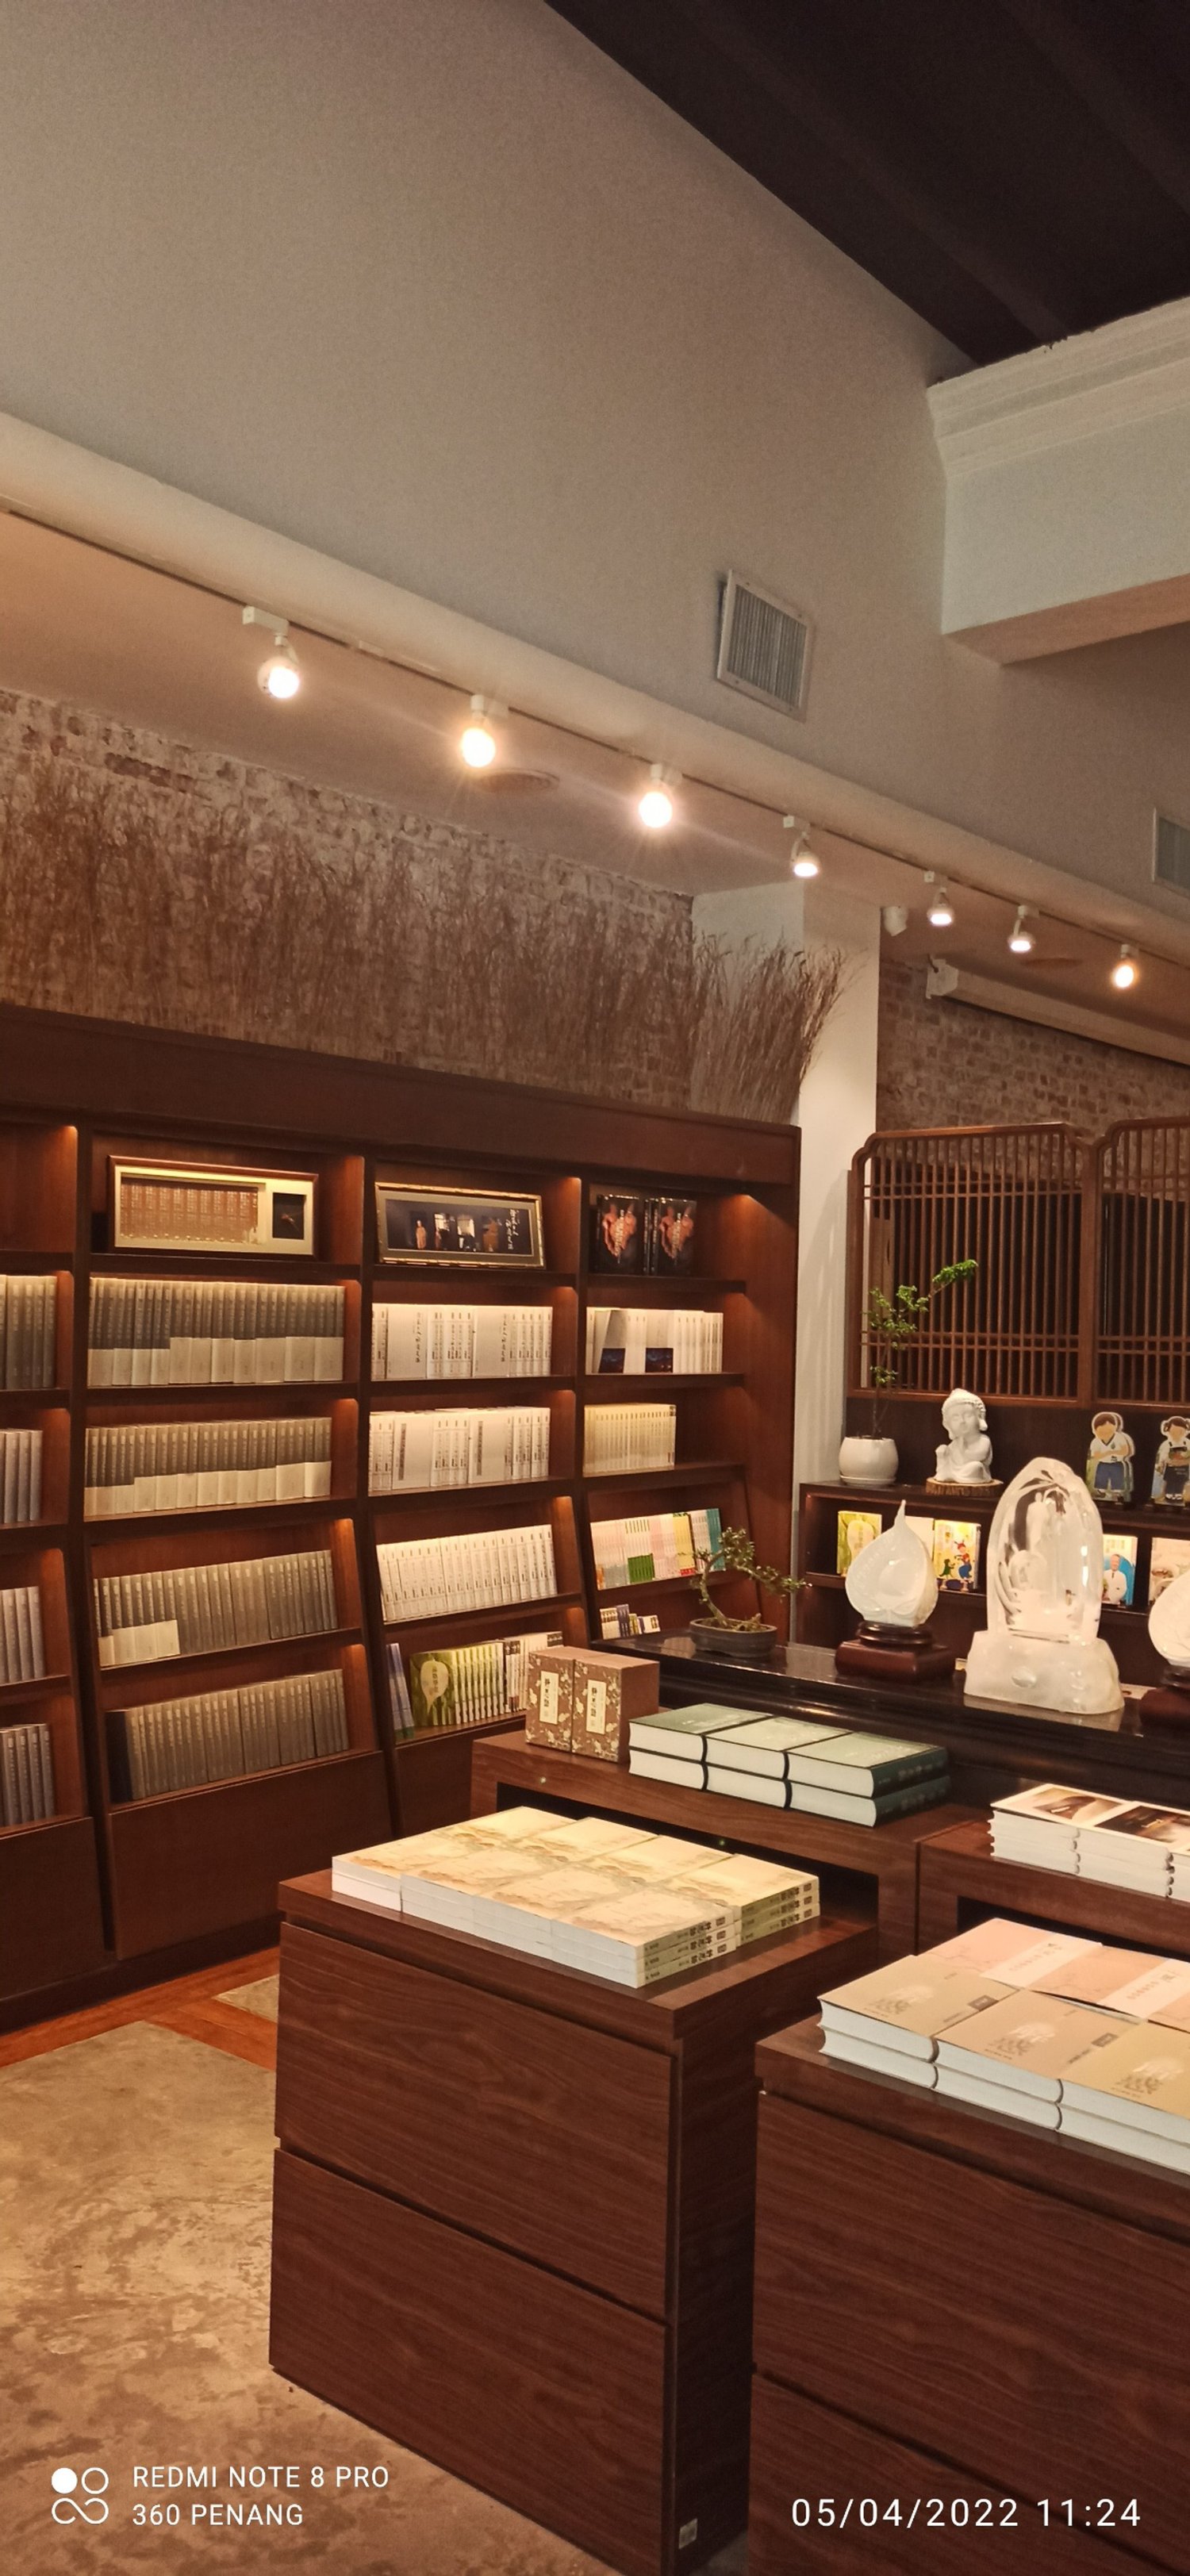 Buddhist books on display 